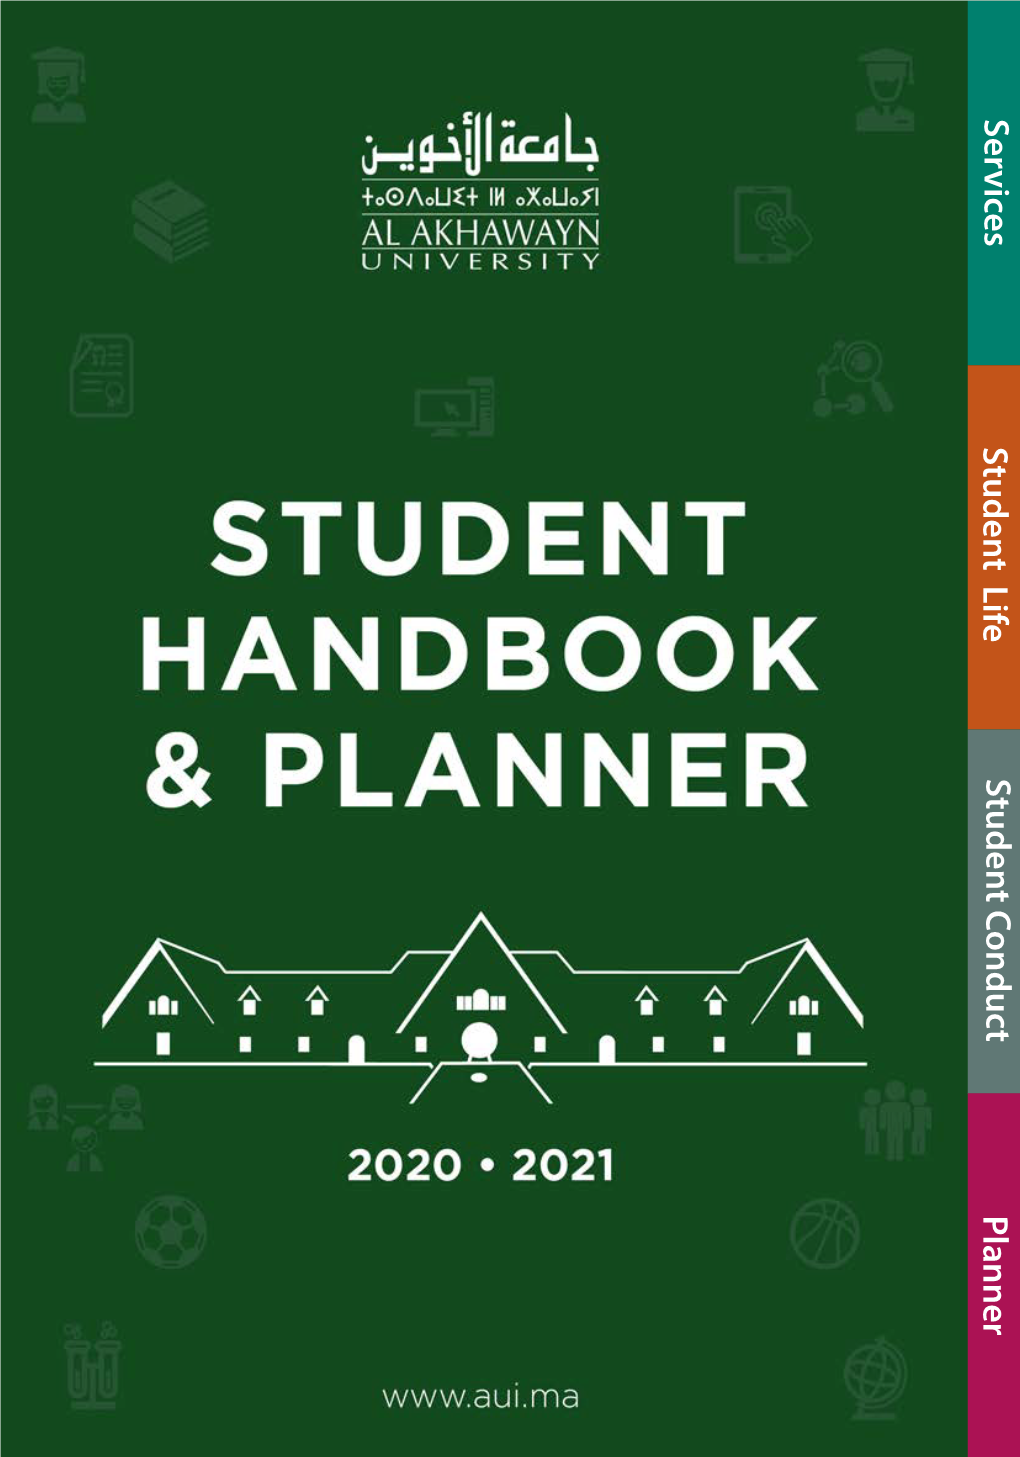 Student Handbook and Planner 2020 - 2021